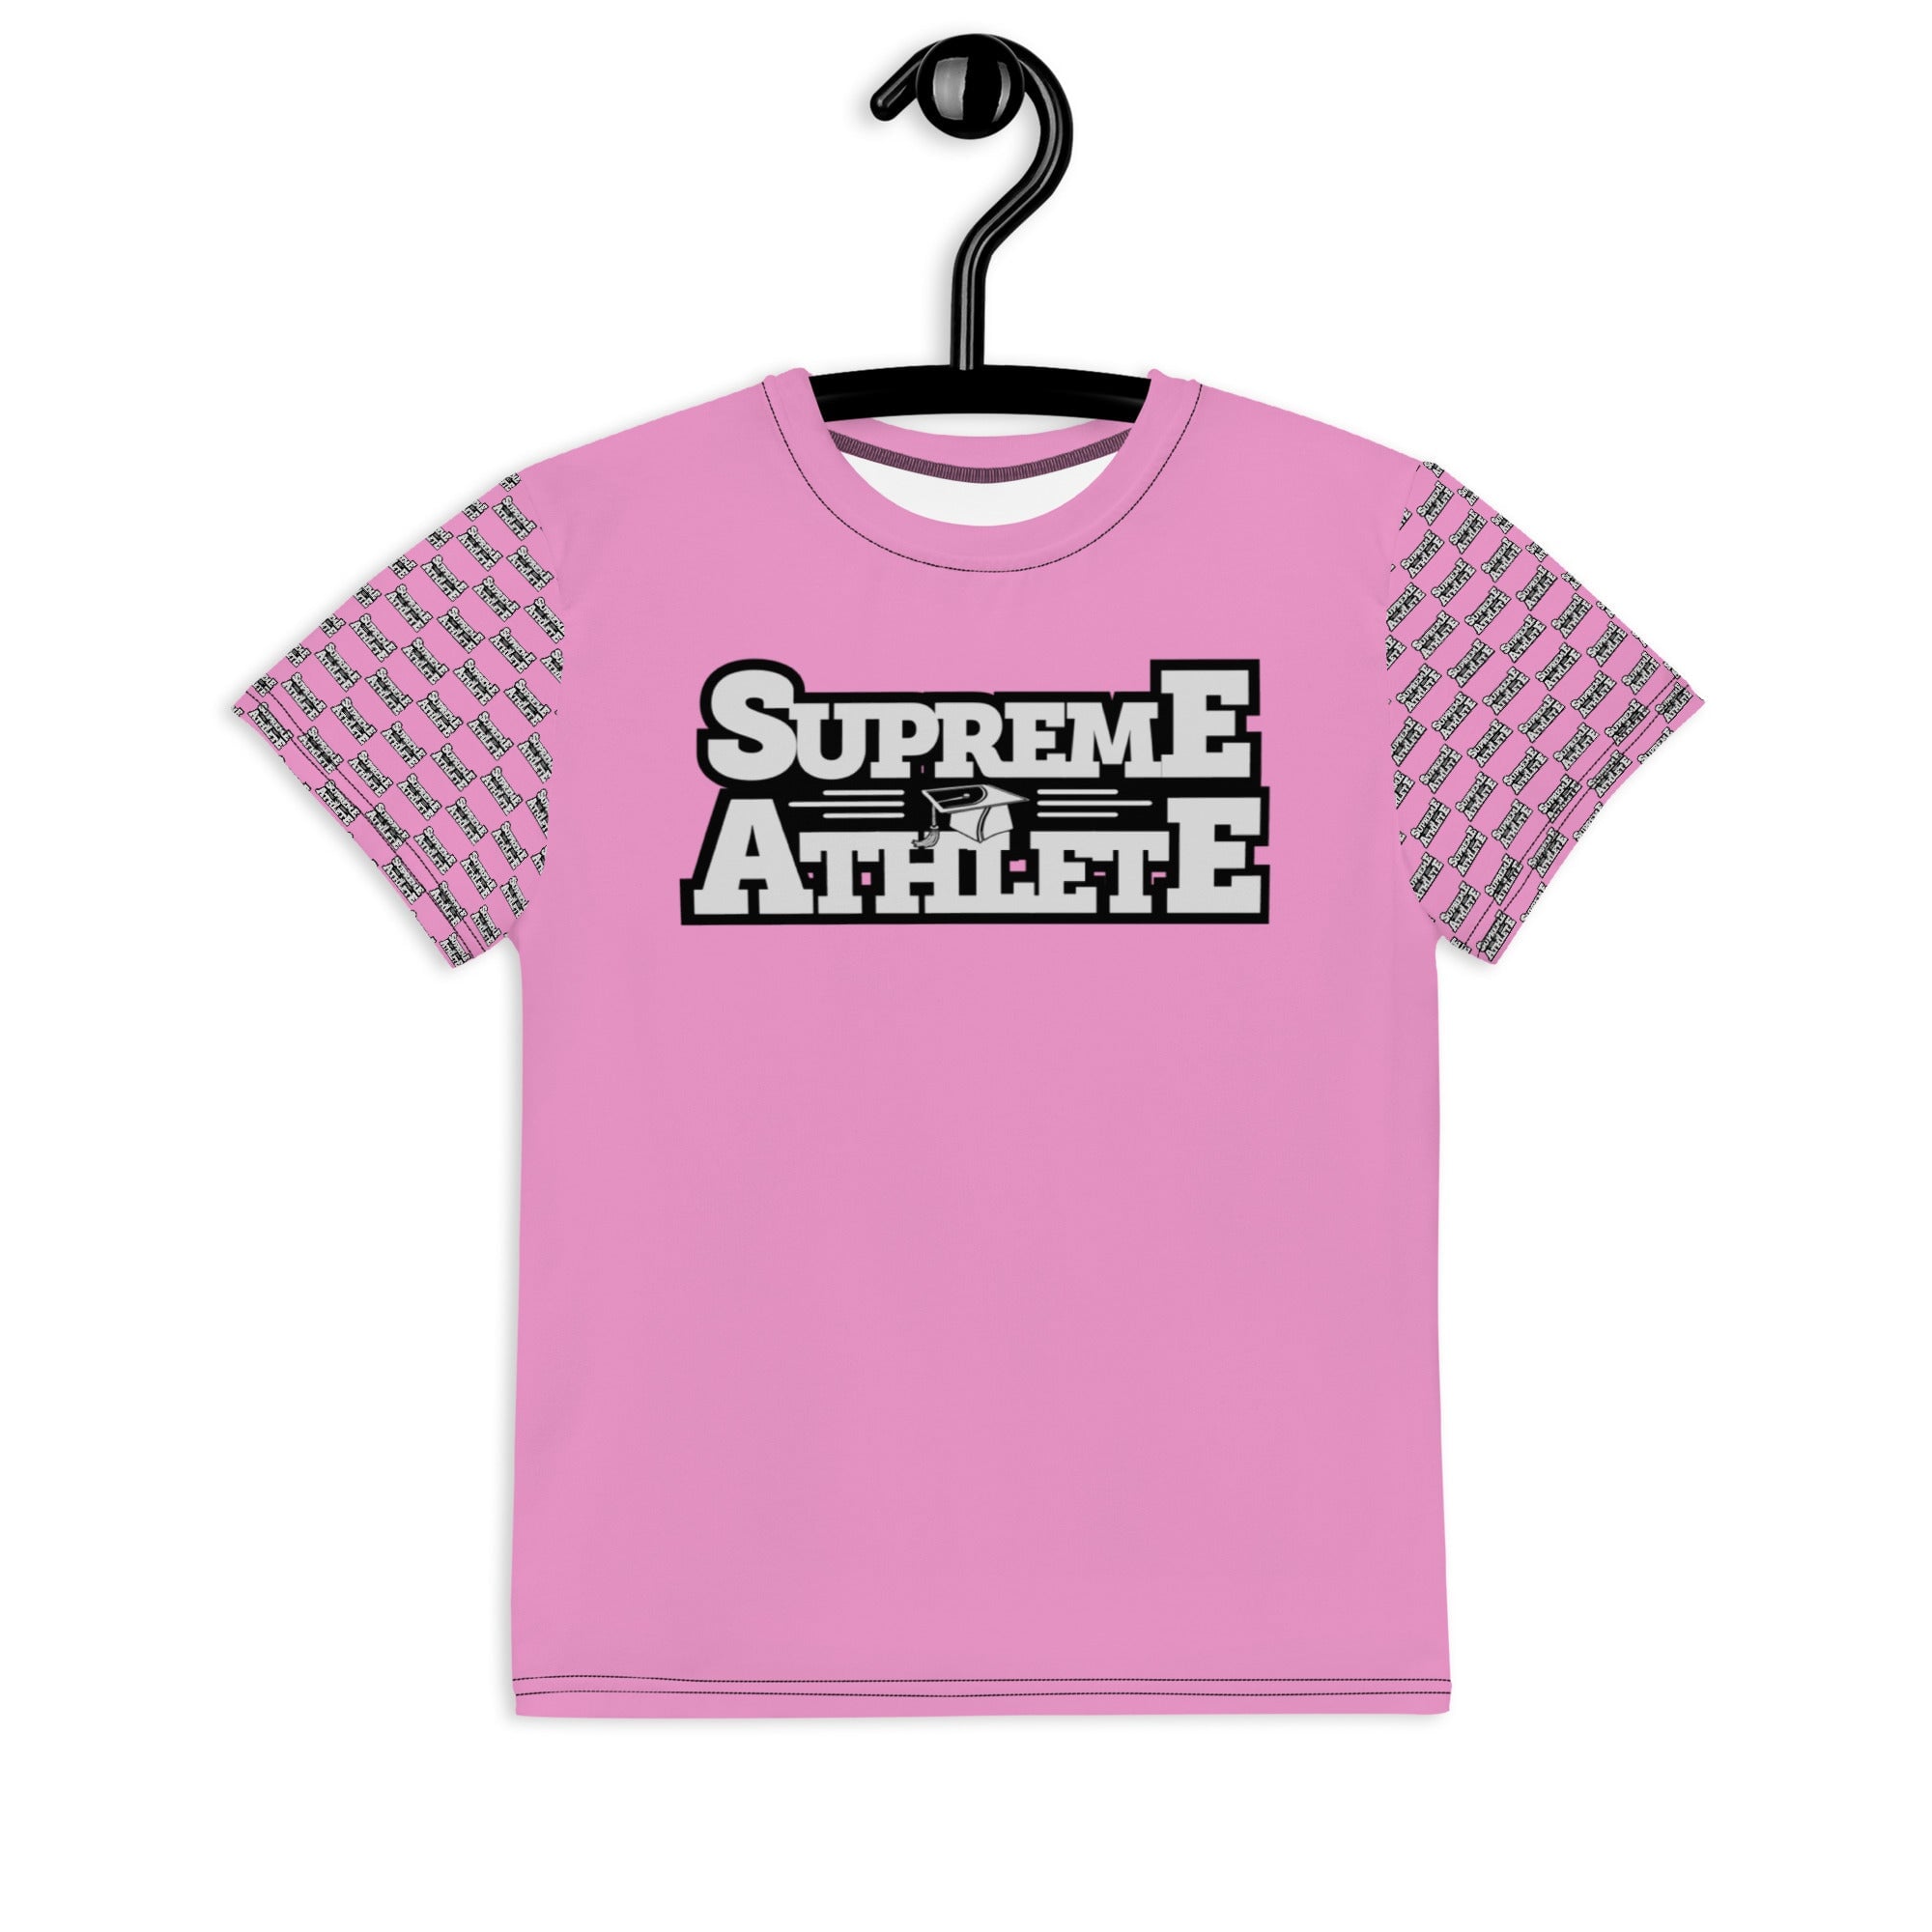 Supreme Athlete Kids Sports Tee